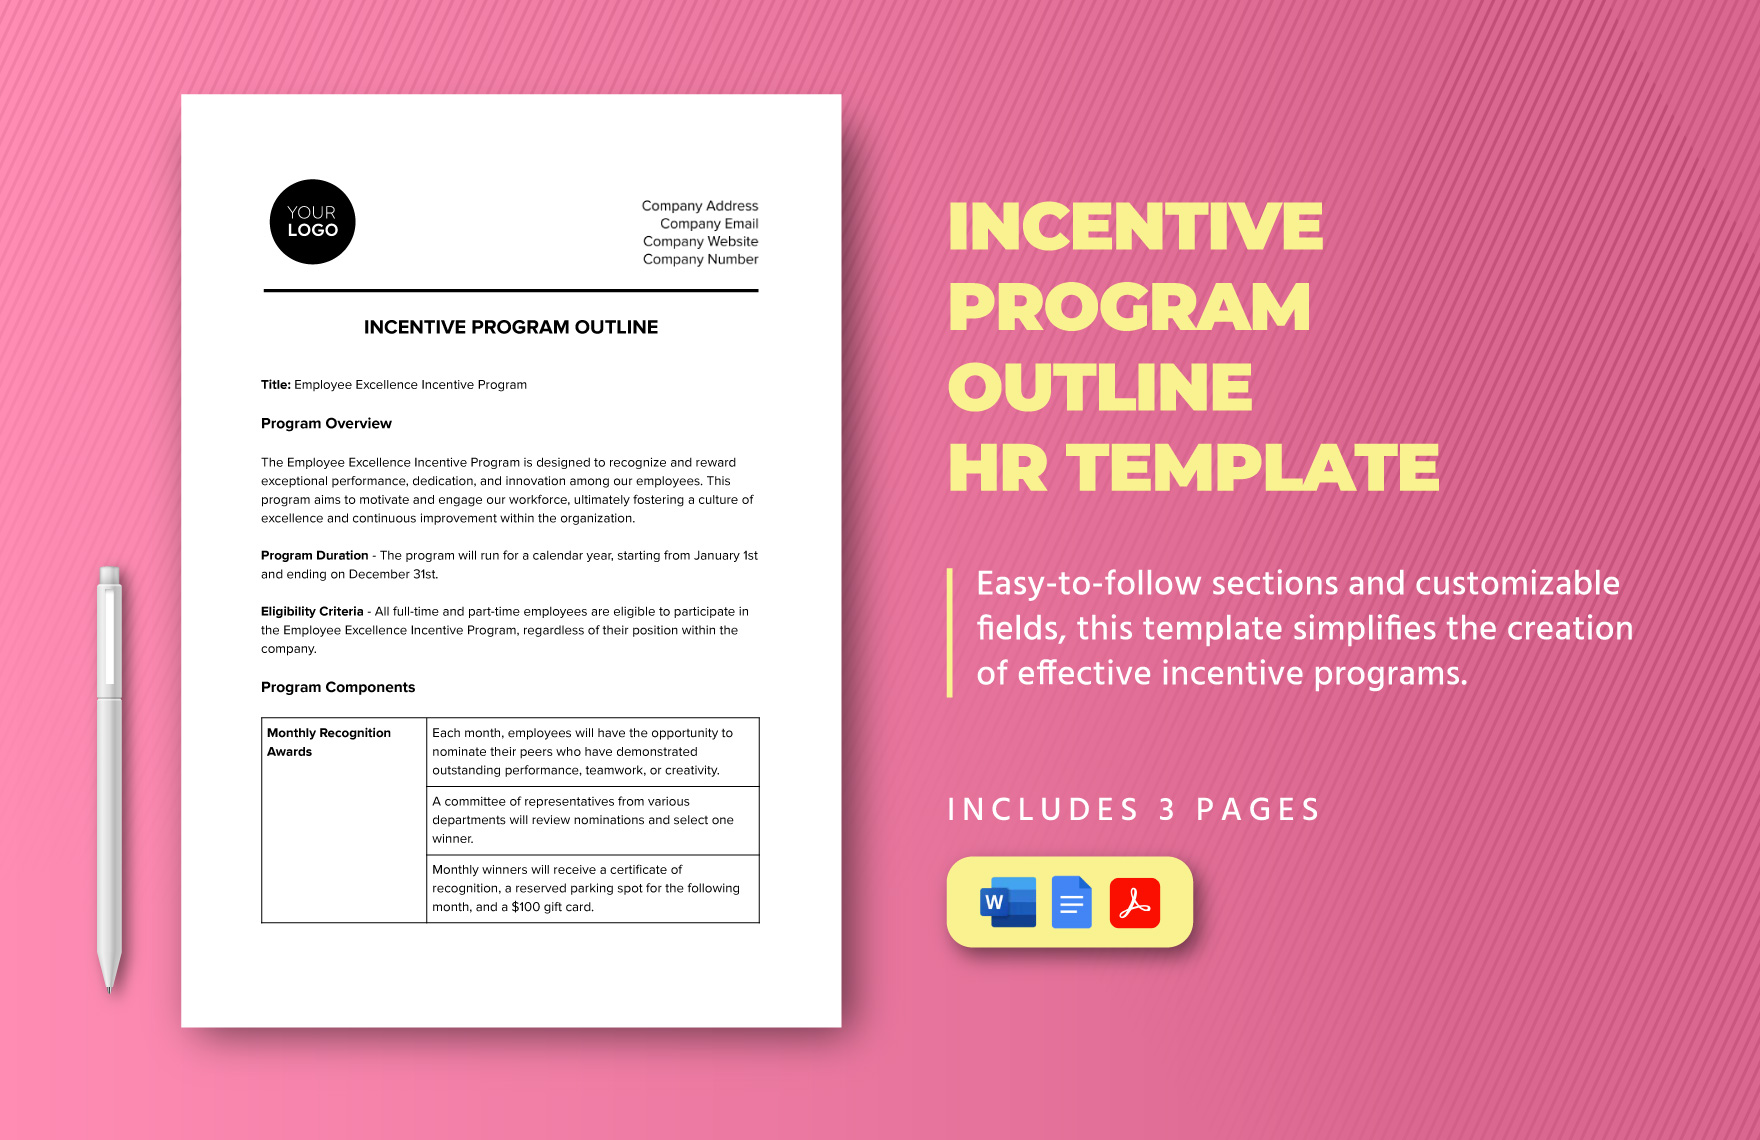 Incentive Program Outline HR Template